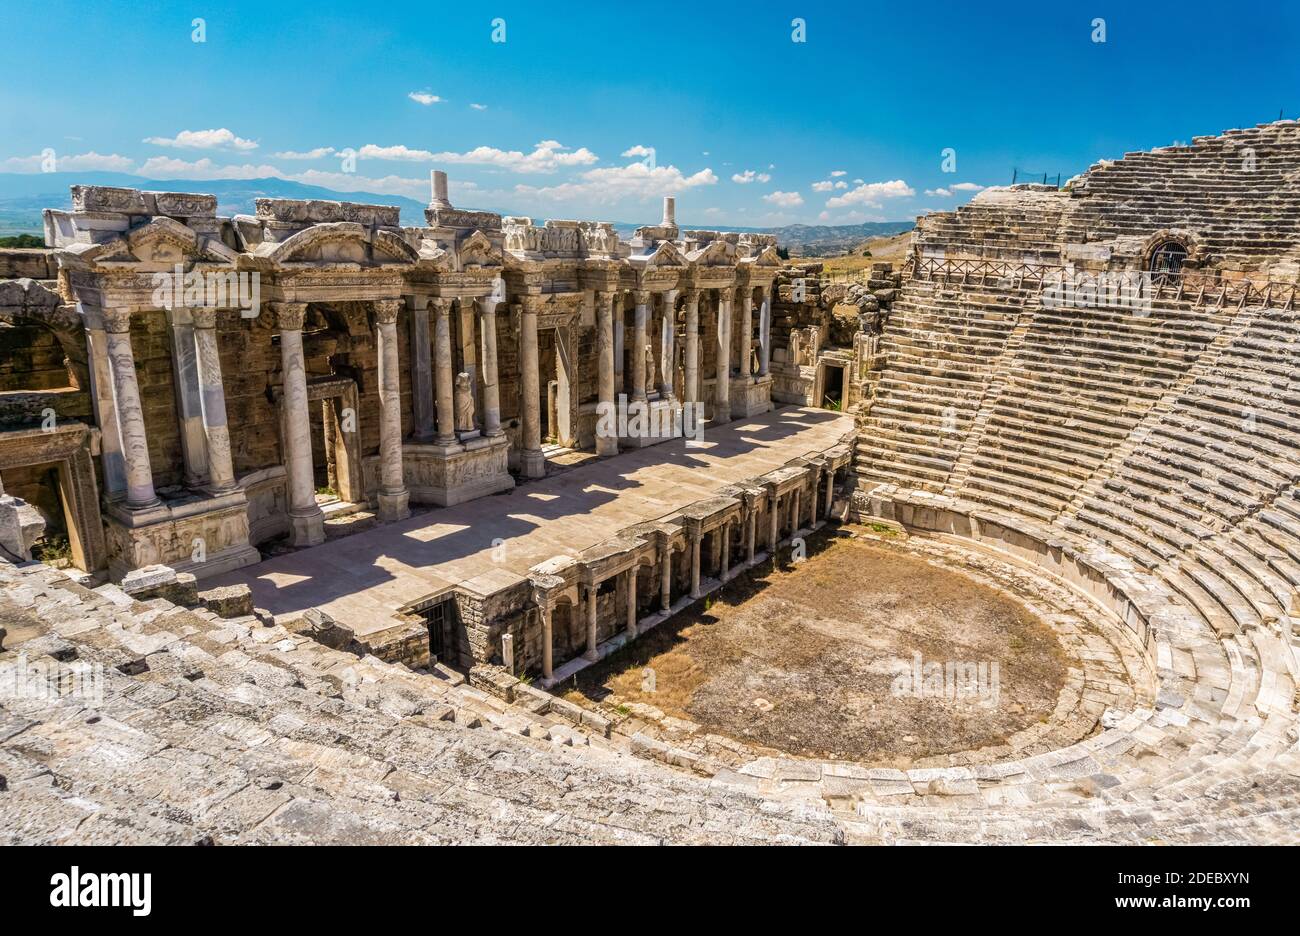 Hierapolis Ancient City Theater, Pamukkale, Denizli, Turkey. Roman Theater view from inside. Stock Photo